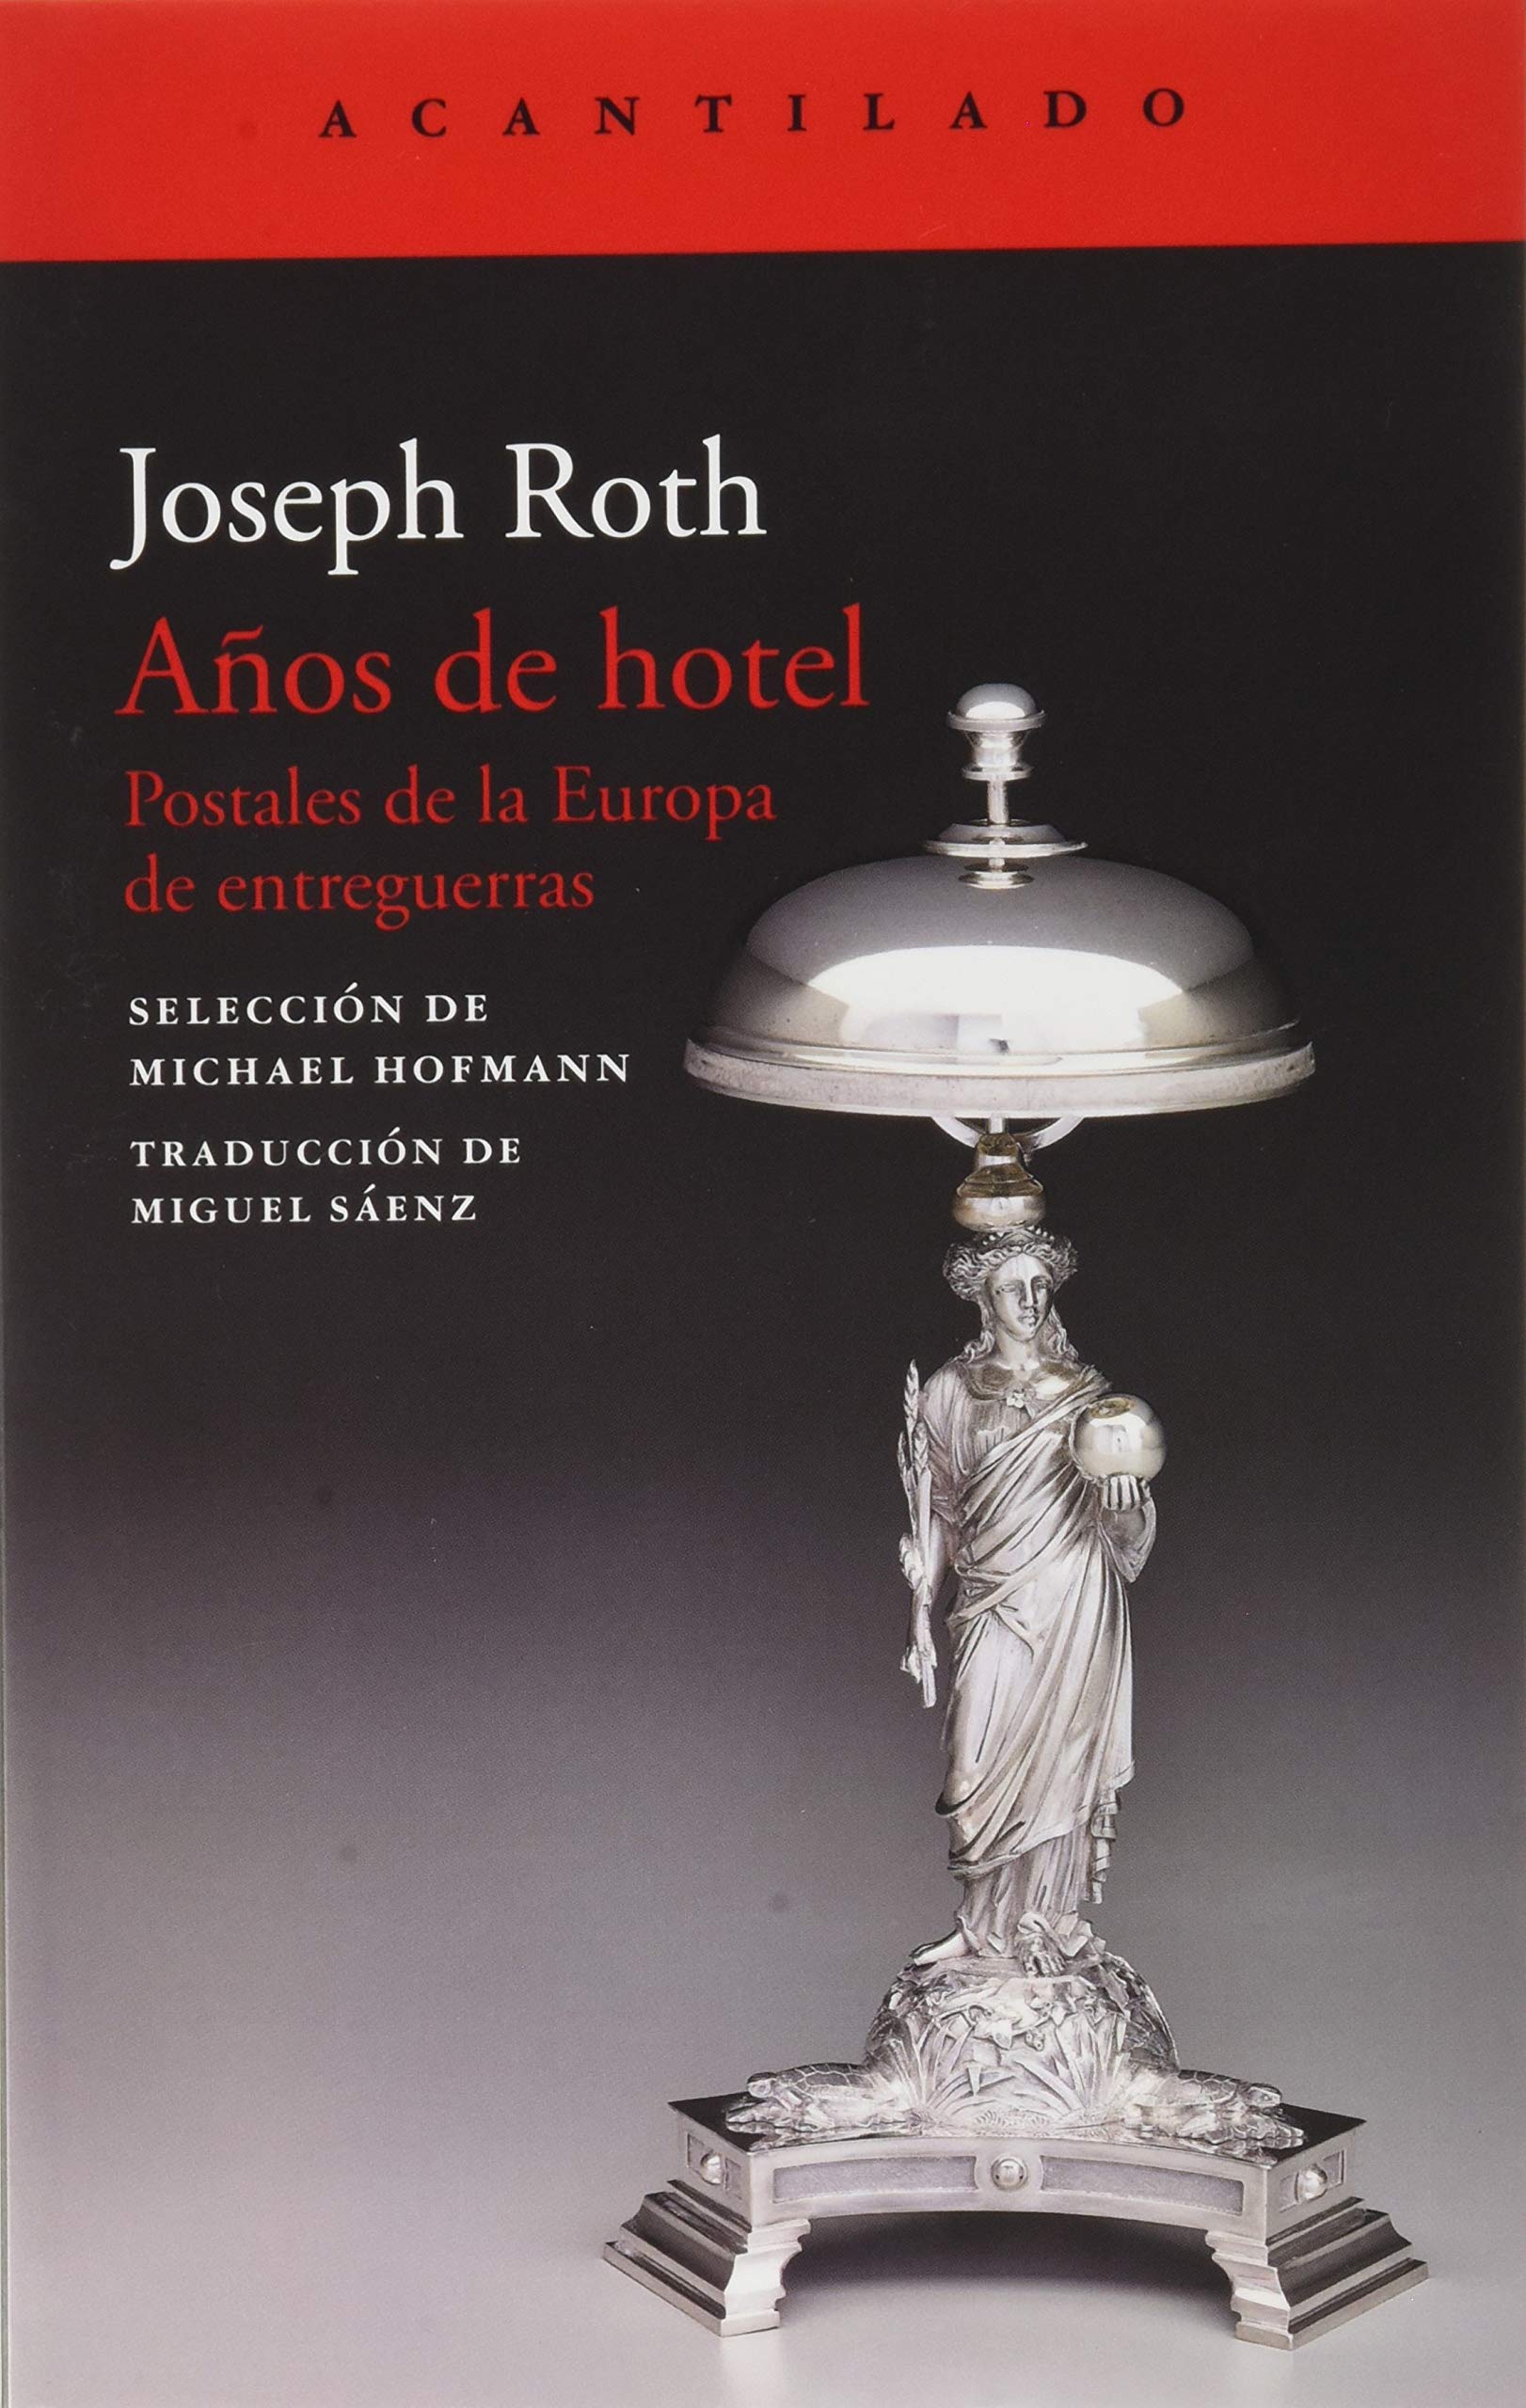 Joseph Roth, nazismo, periodismo y vida de hotel